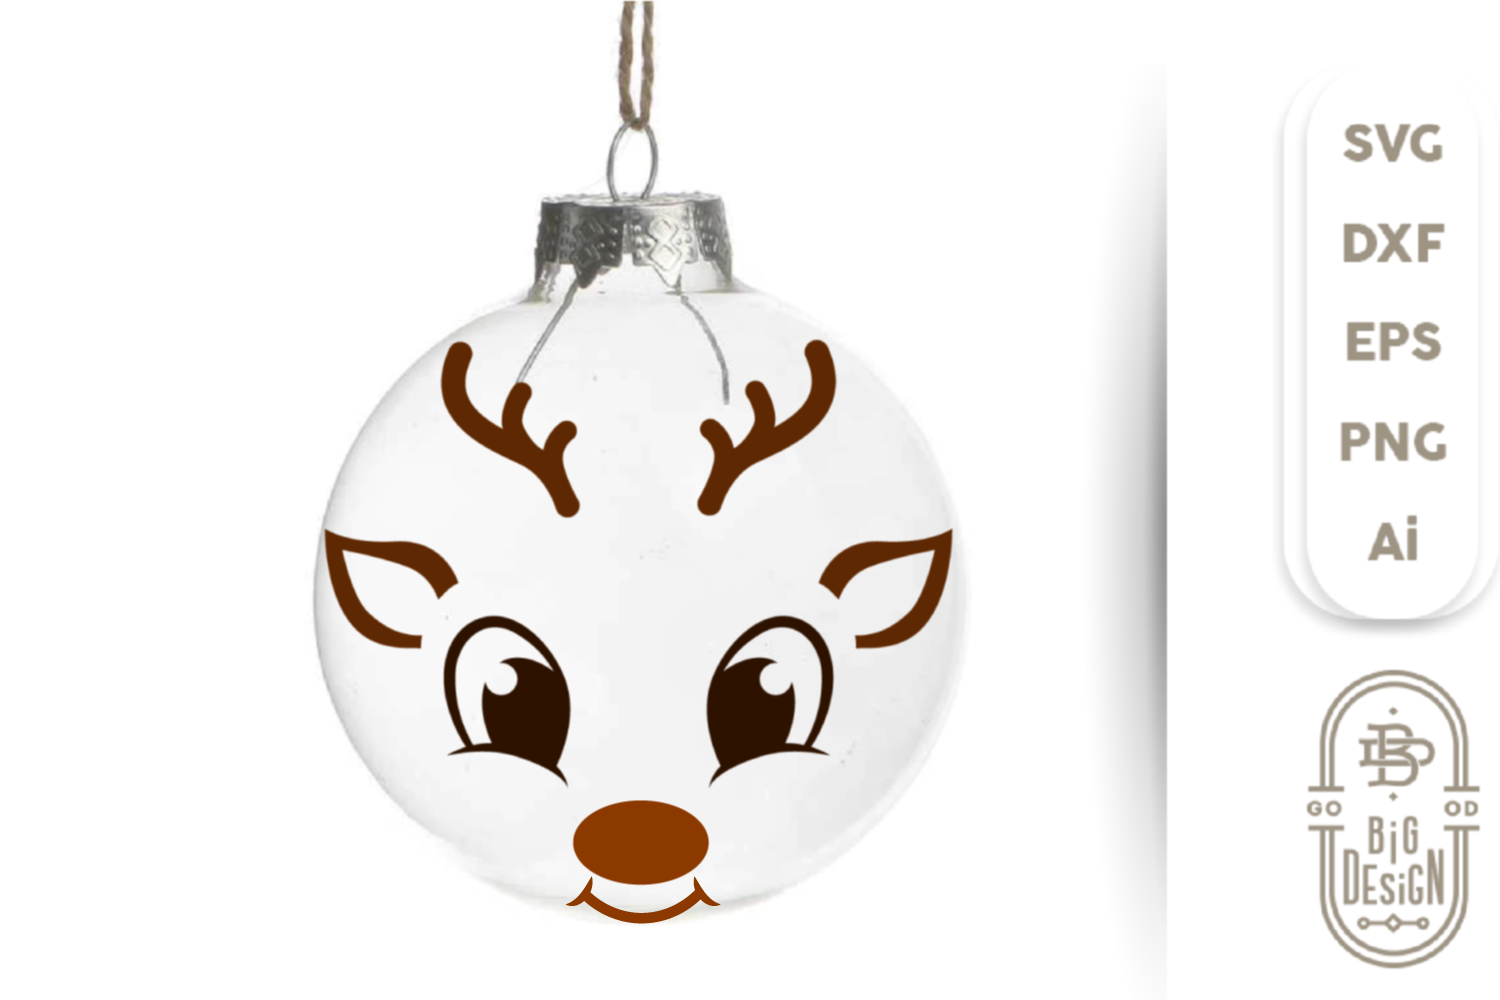 Download Christmas Svg Baby Reindeer Svg Cute Boy Reindeer Face By Big Design Thehungryjpeg Com